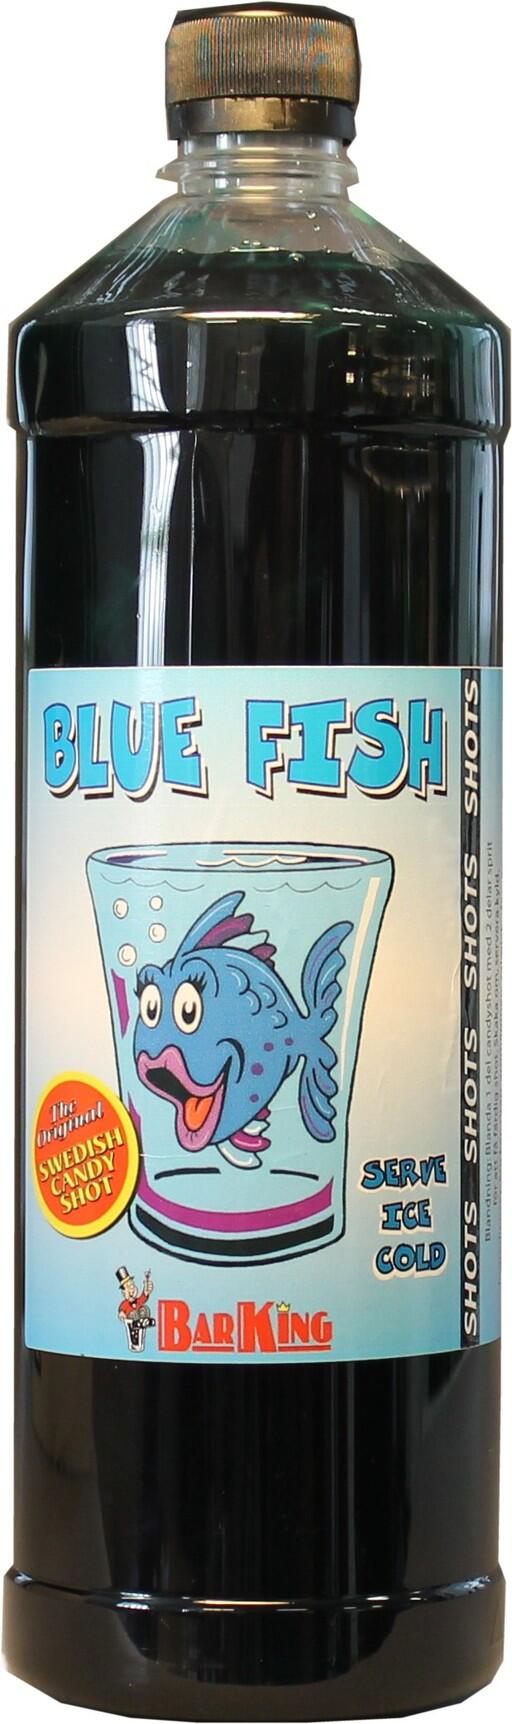 Blå fisk shot (Blue fish shots) med smak av menthol och salmiak.